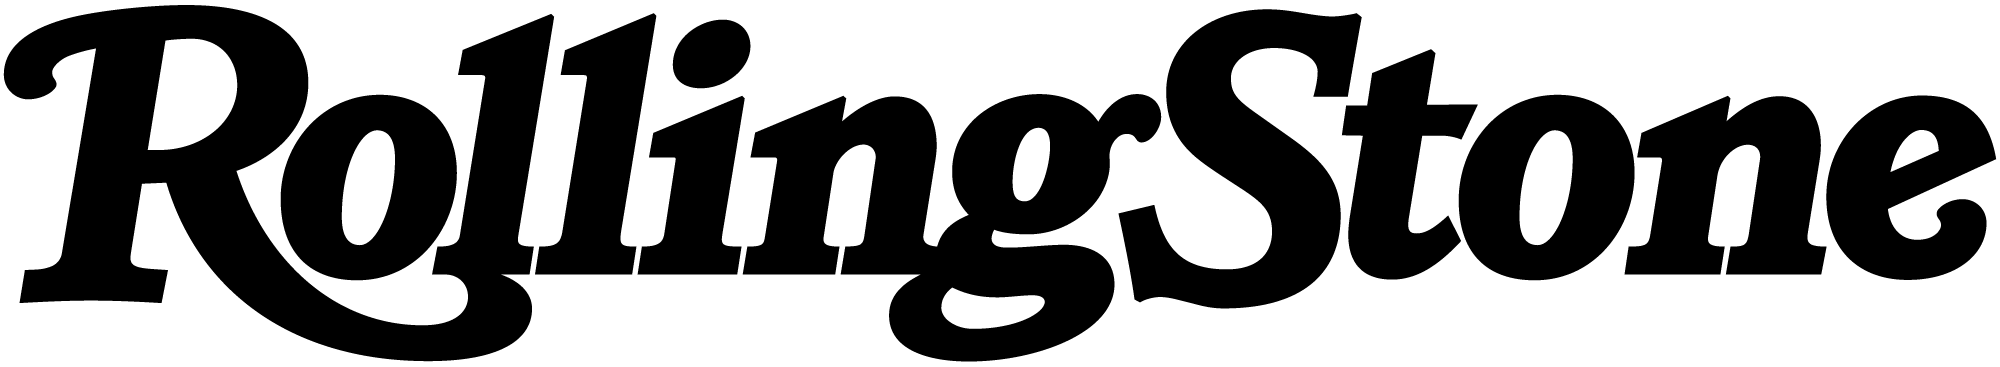 Rolling-Stone-logo-2018